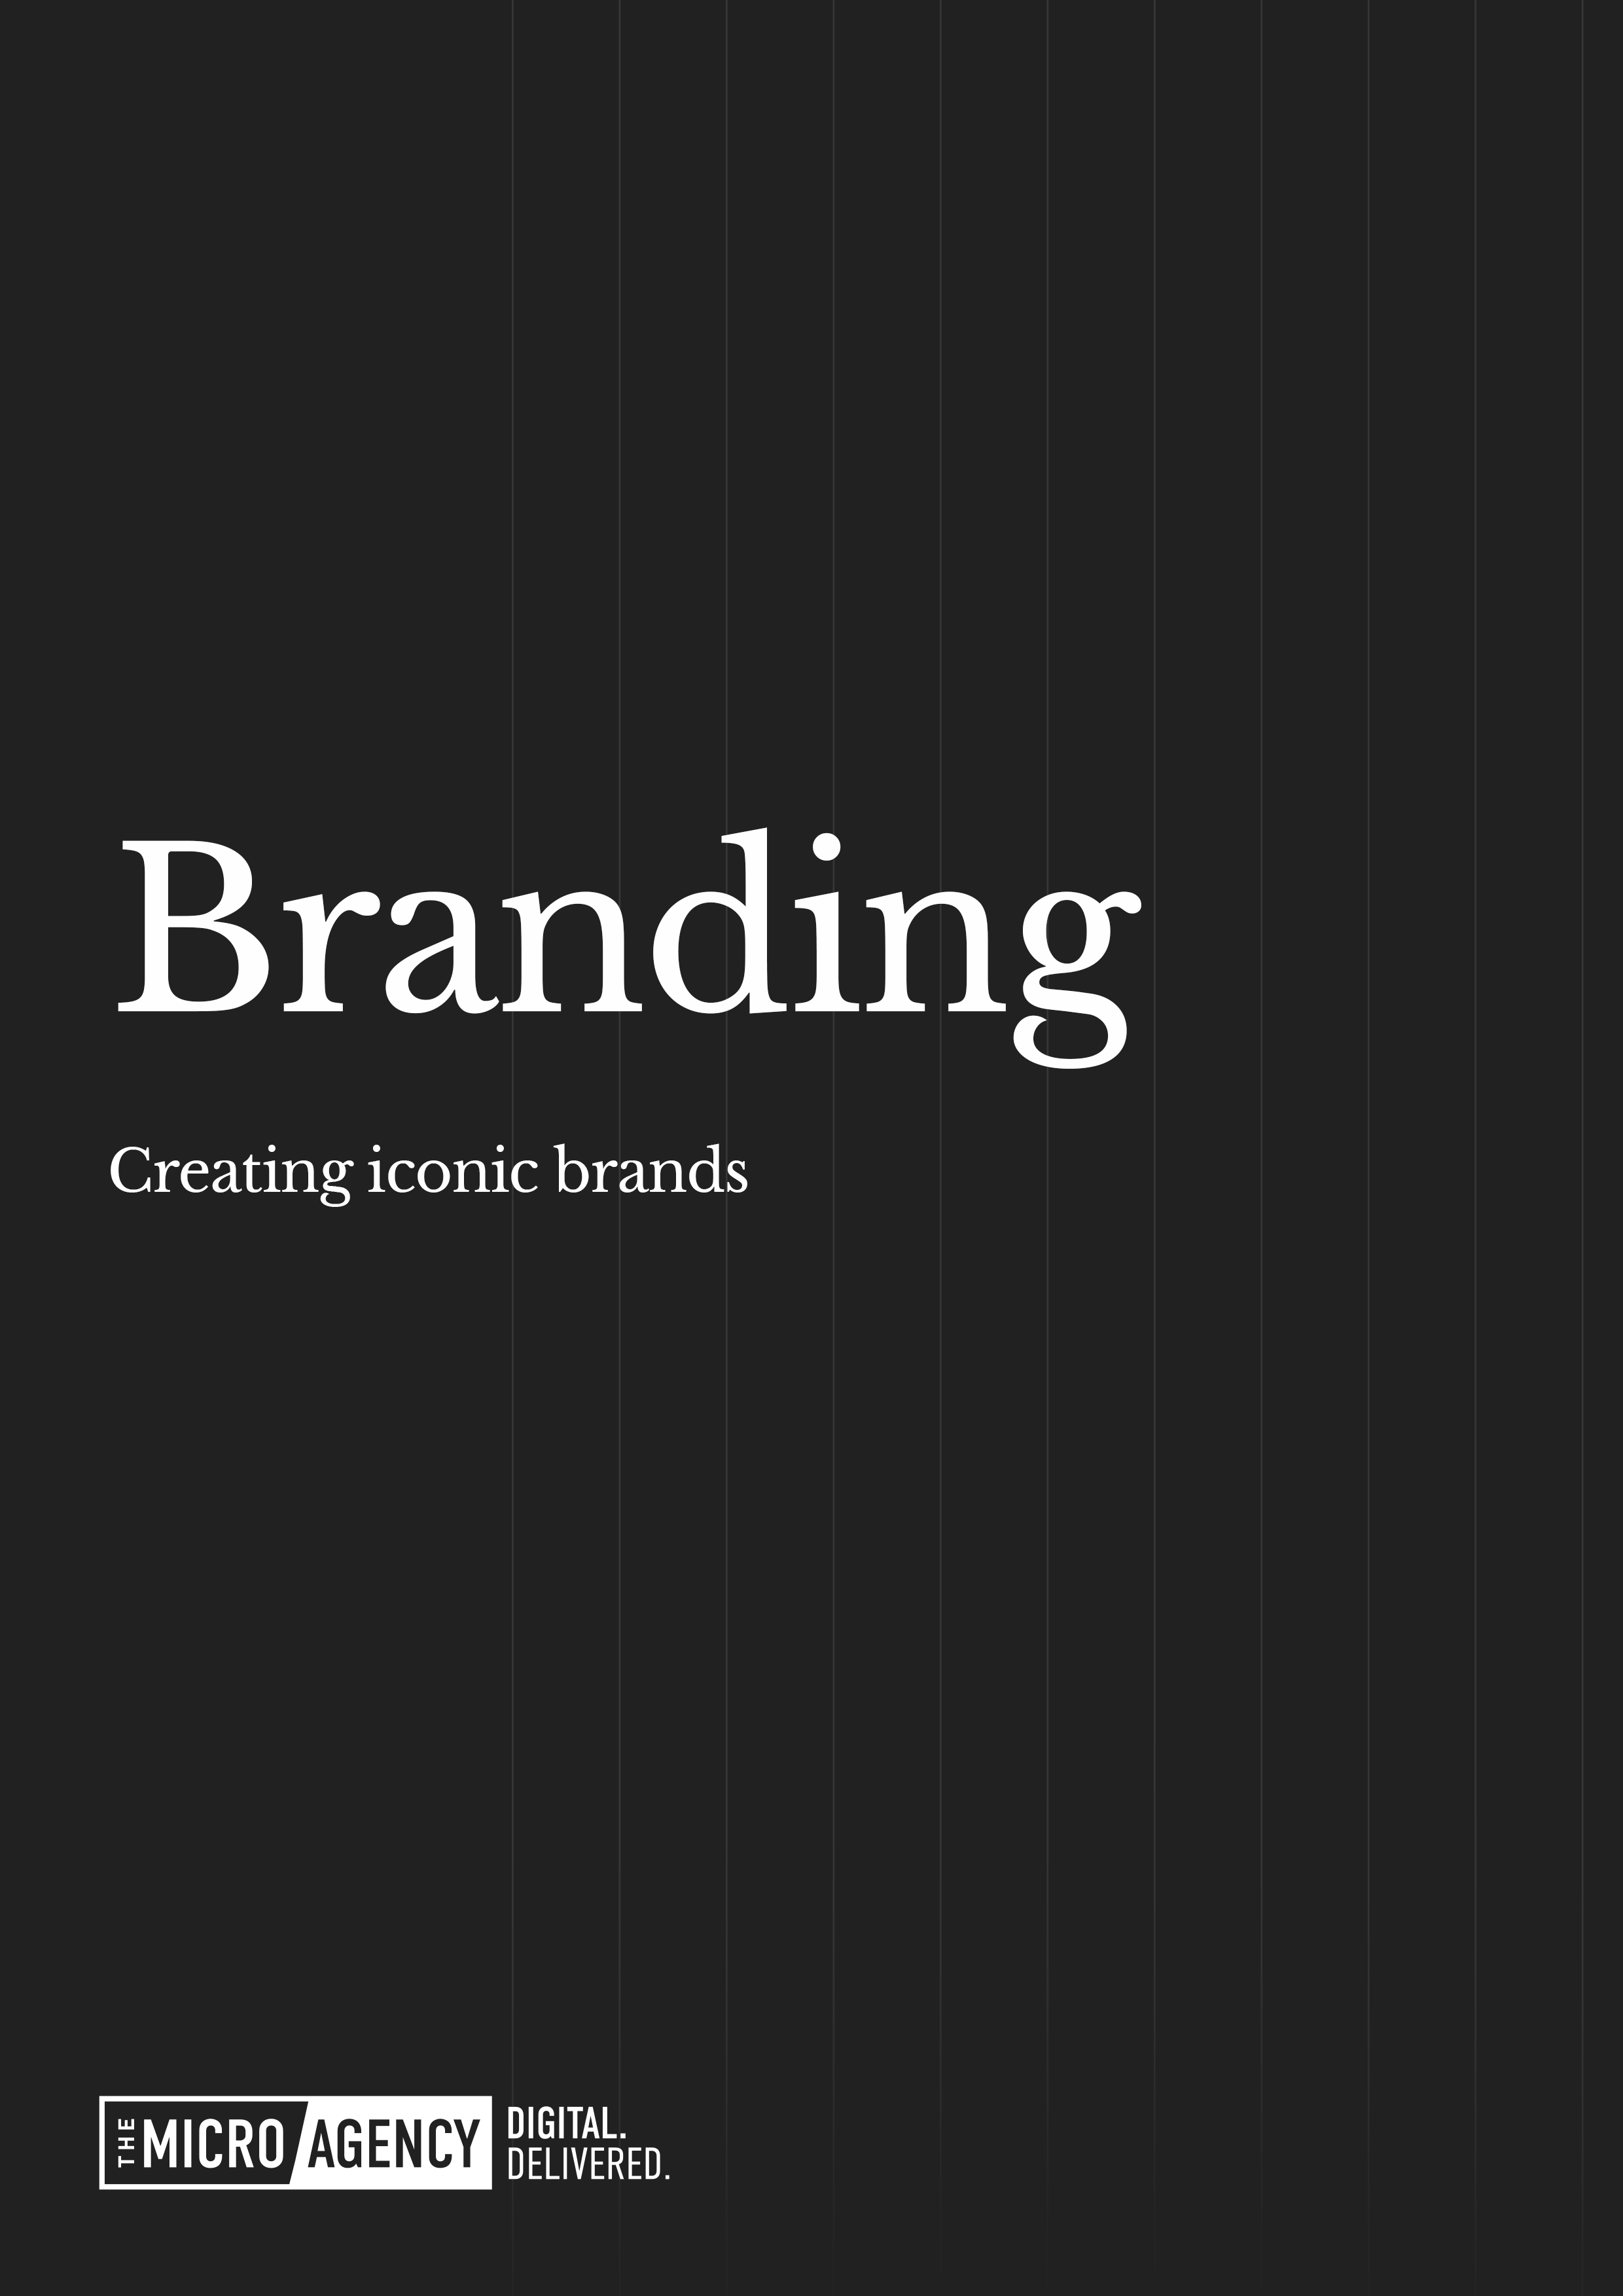 Branding - Creating iconic brands